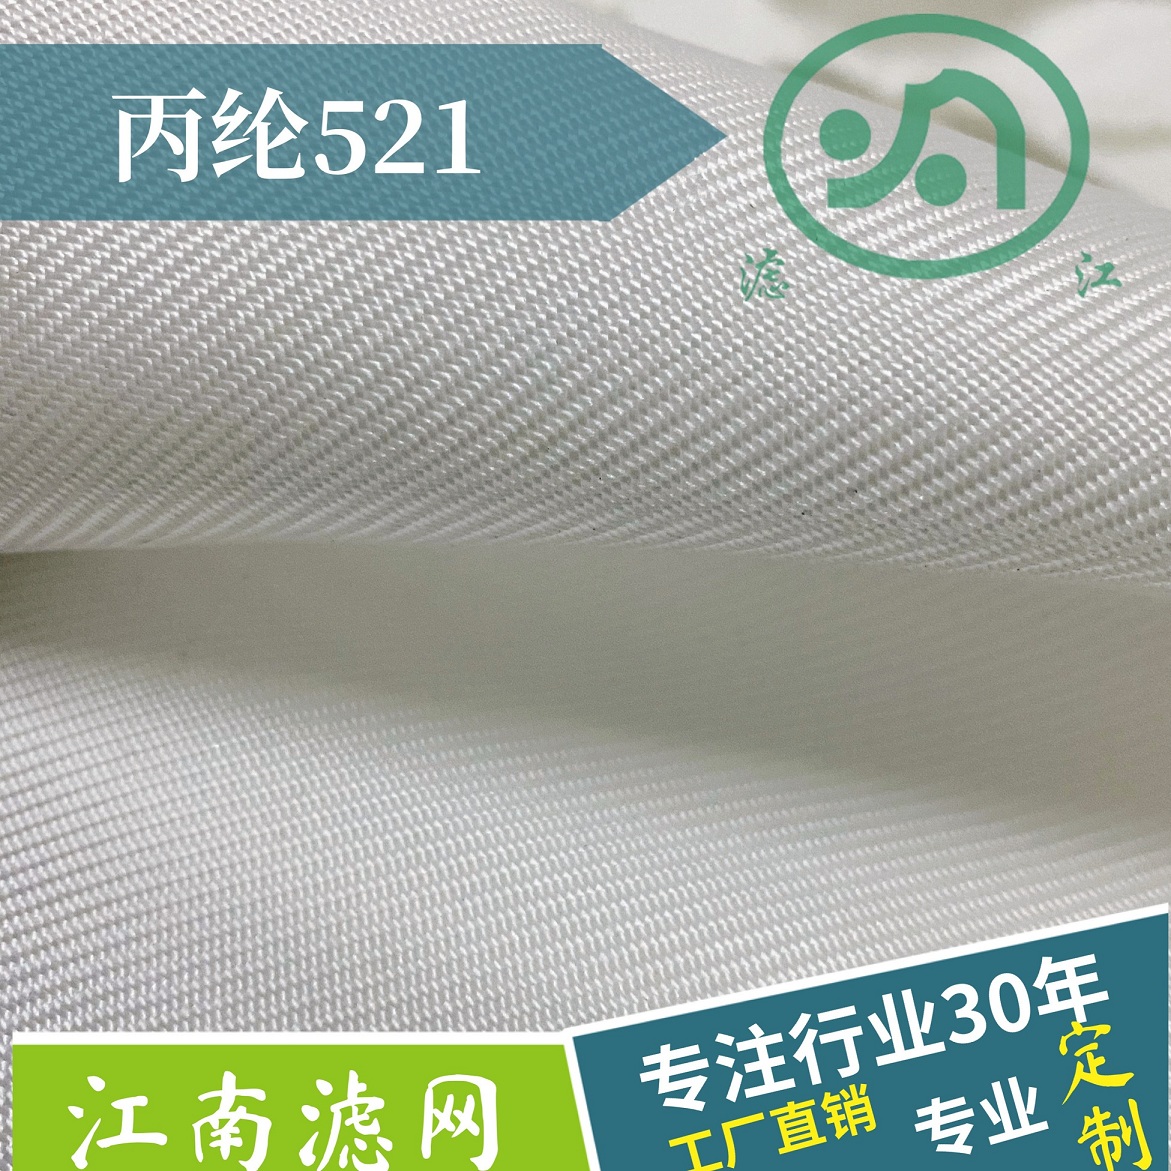 Polypropylene filter cloth 521